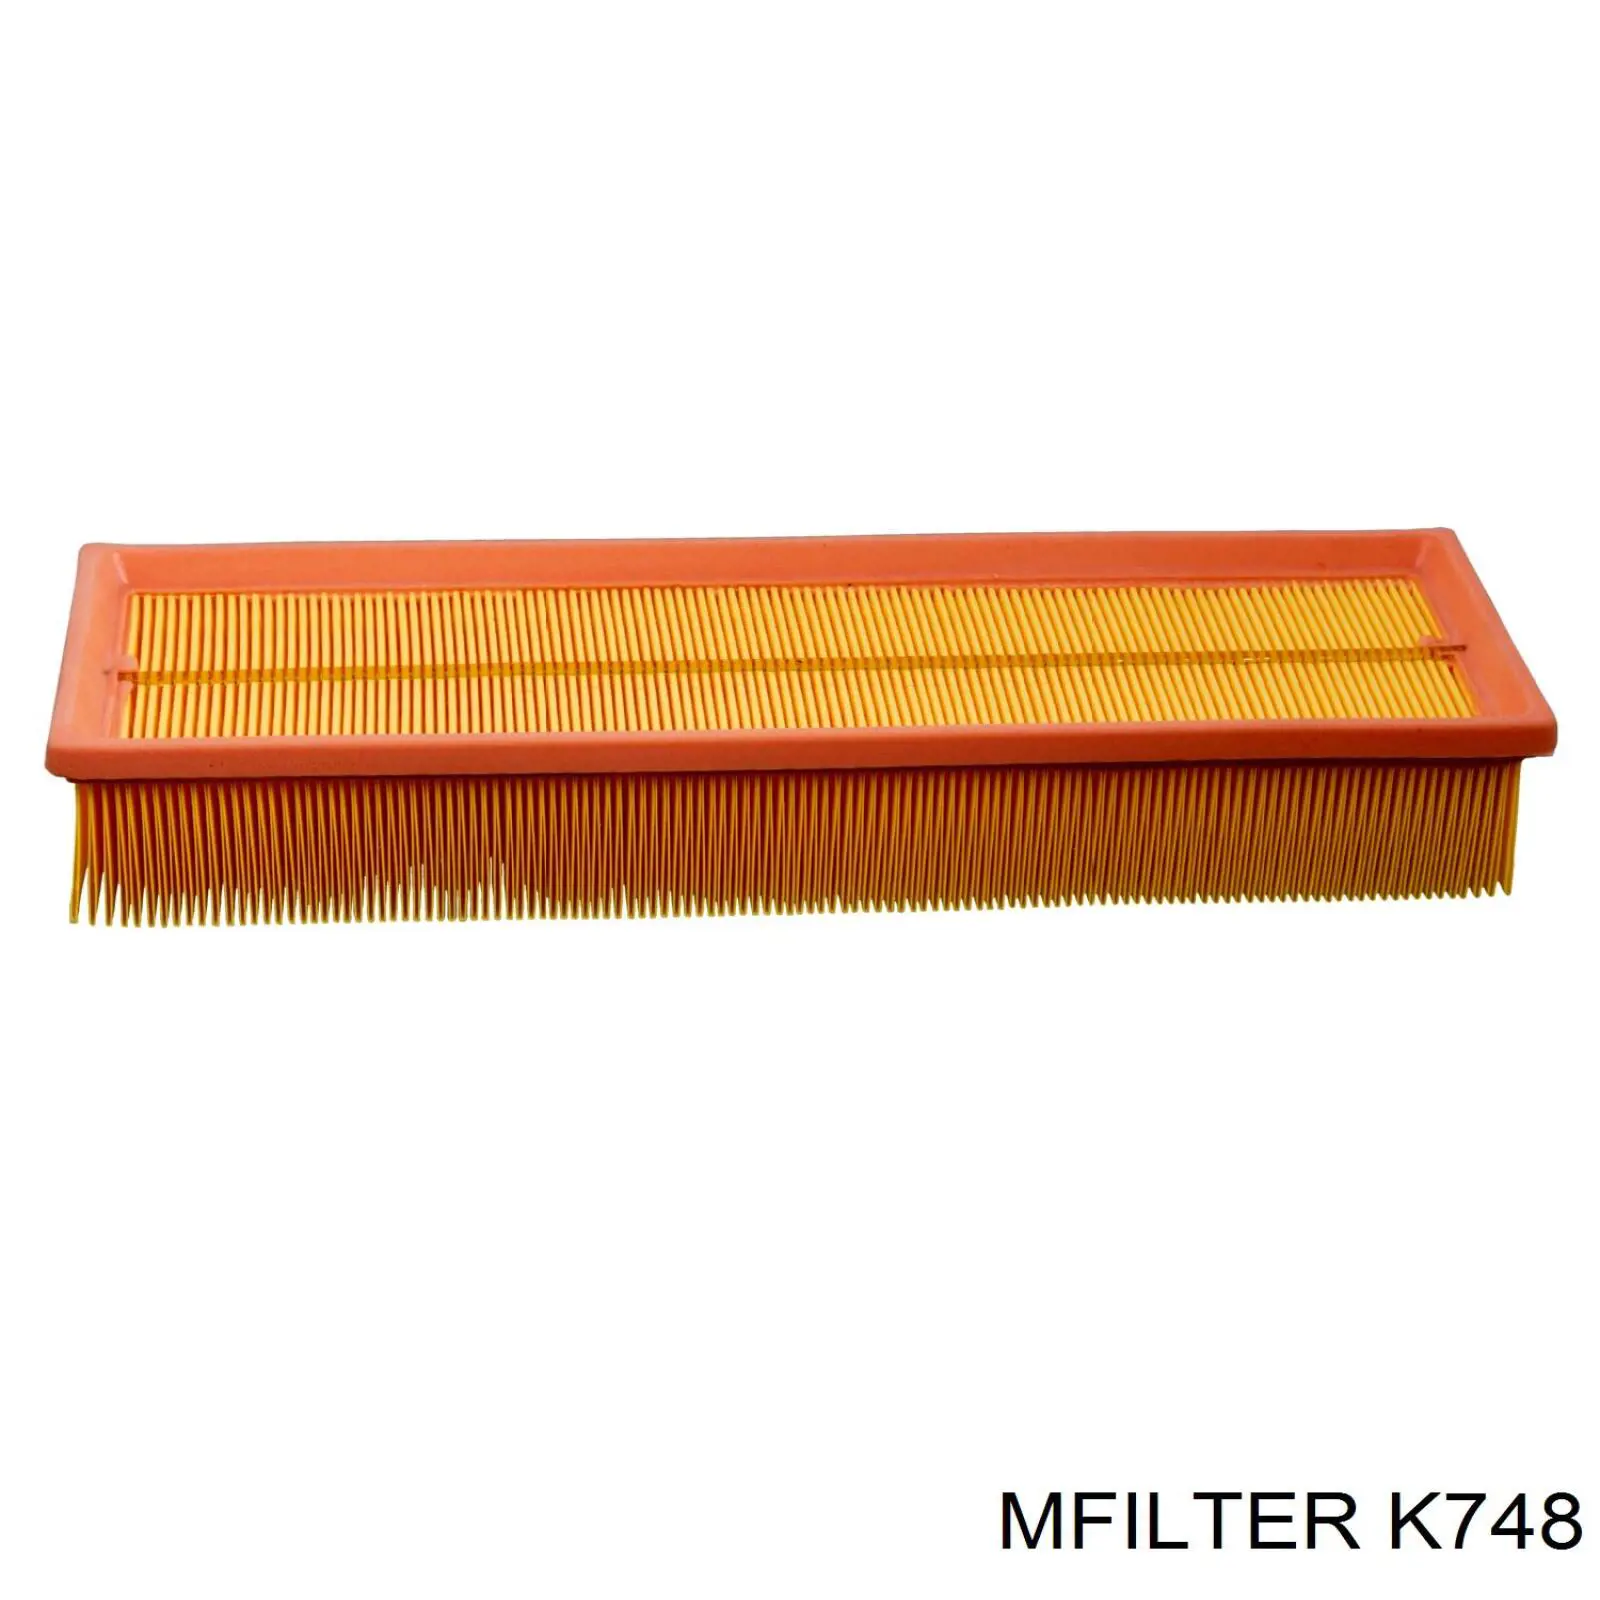 K748 Mfilter filtro de aire